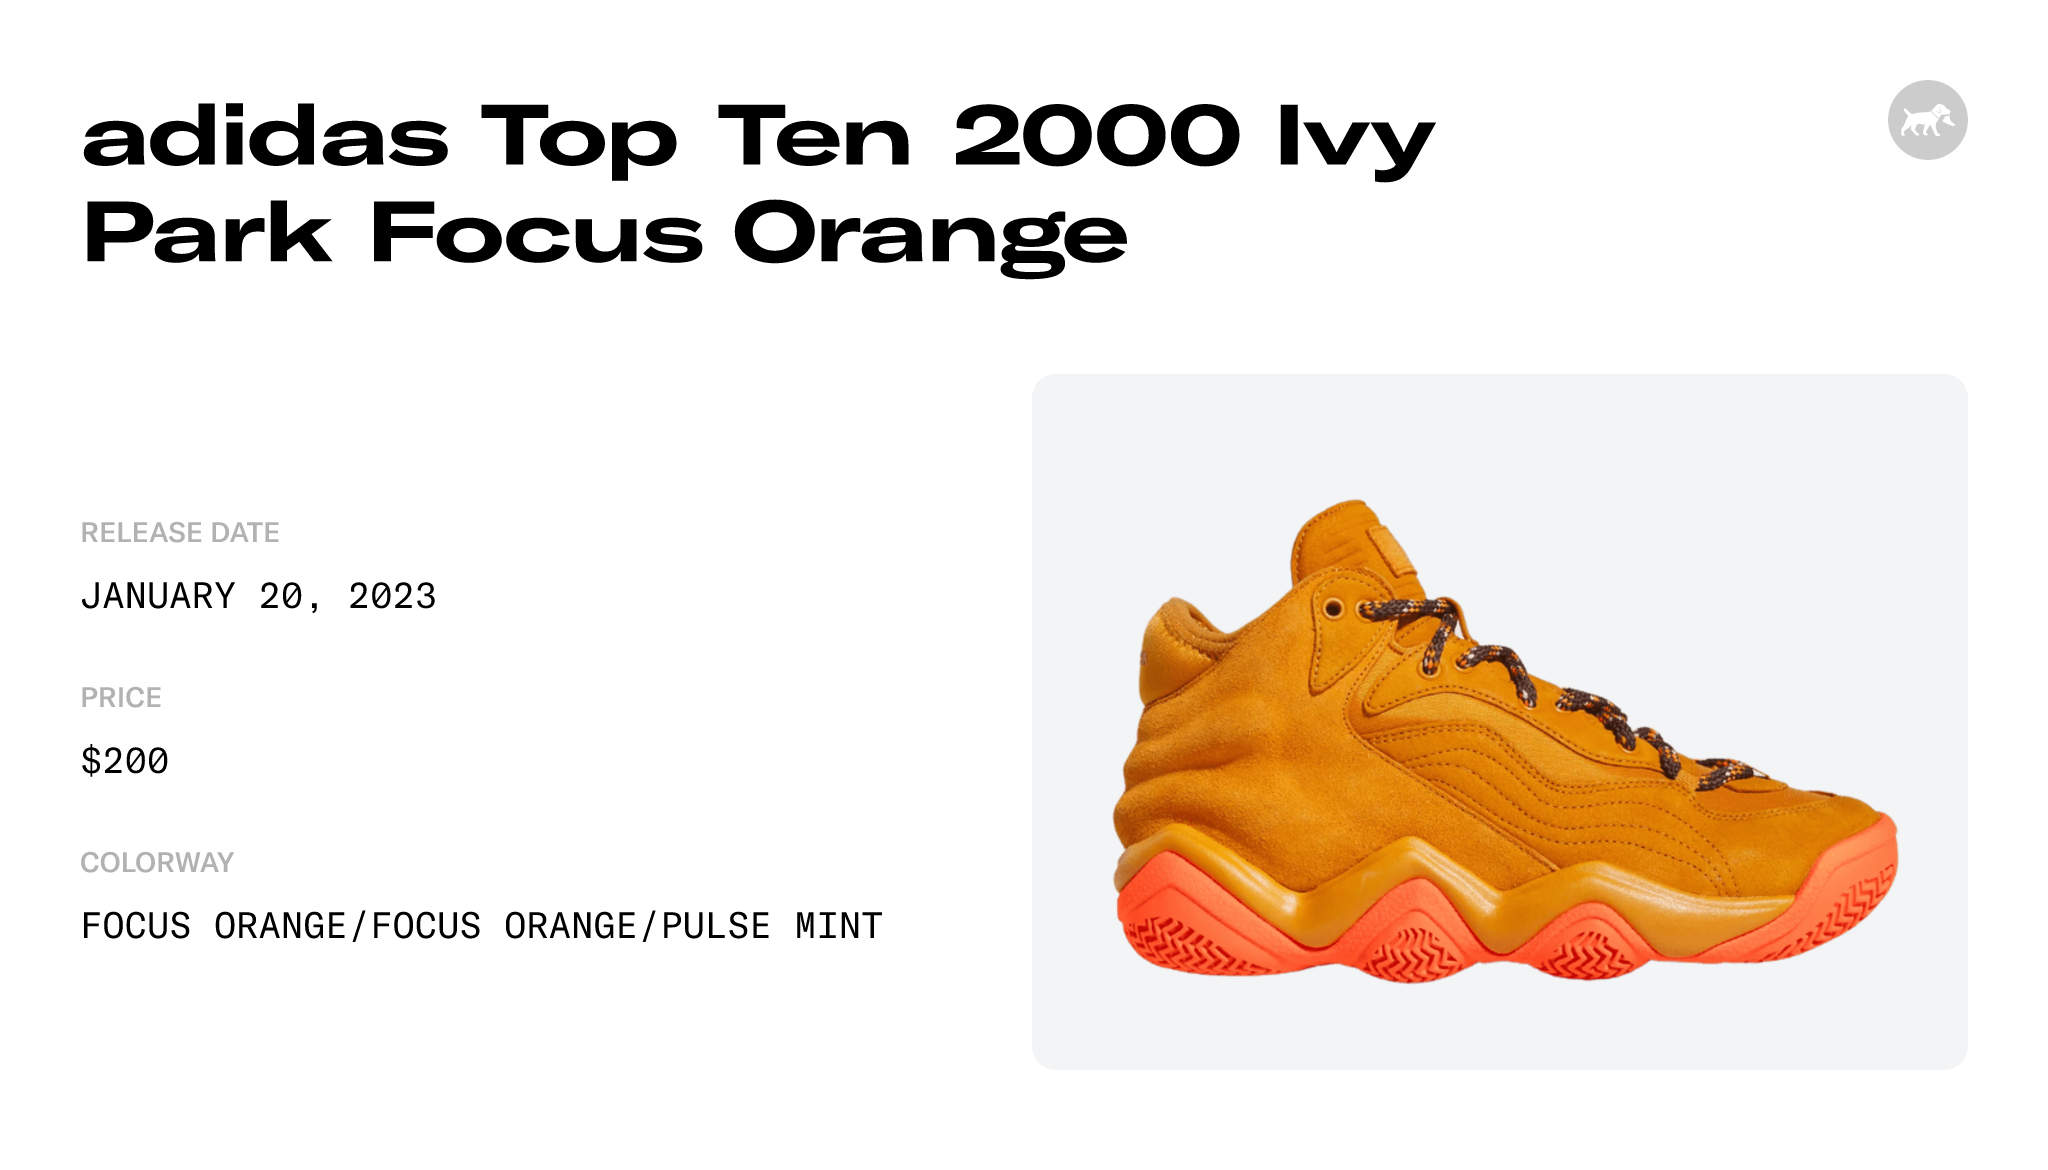 adidas Top Ten 2000 Ivy Park Focus Orange - ID5105 Raffles and